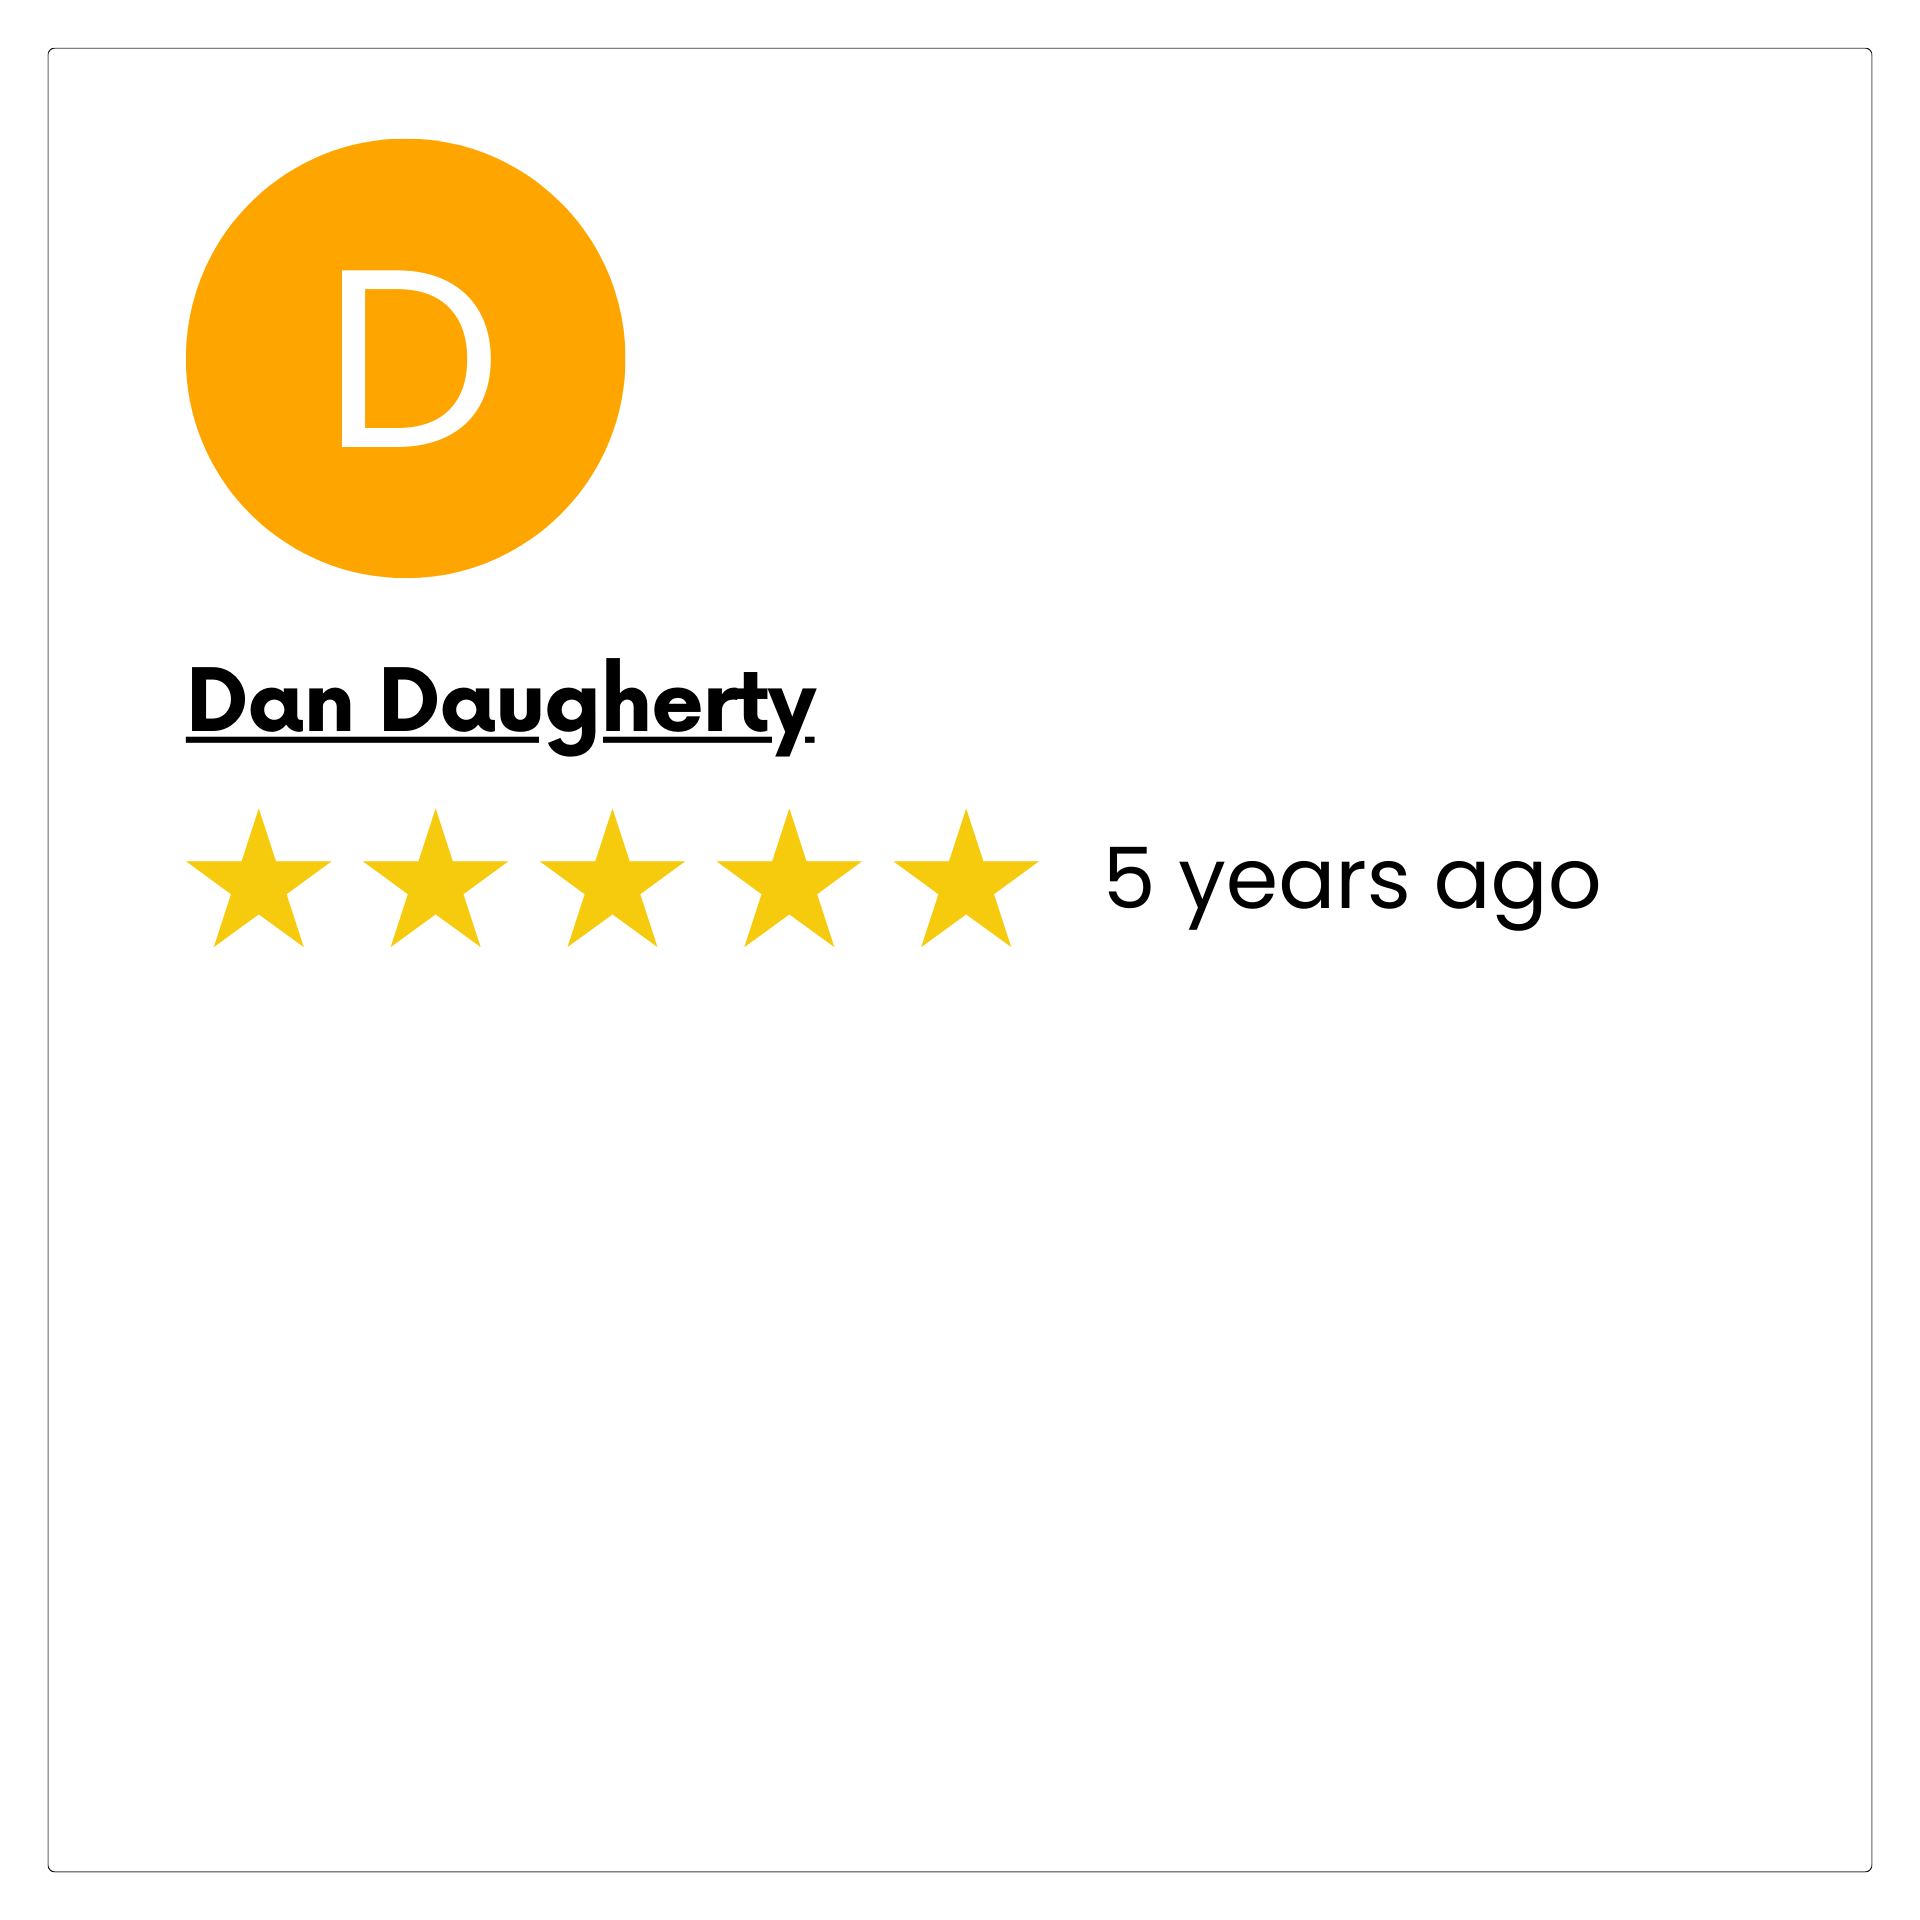 A 5 star review for dan daugherty 5 years ago